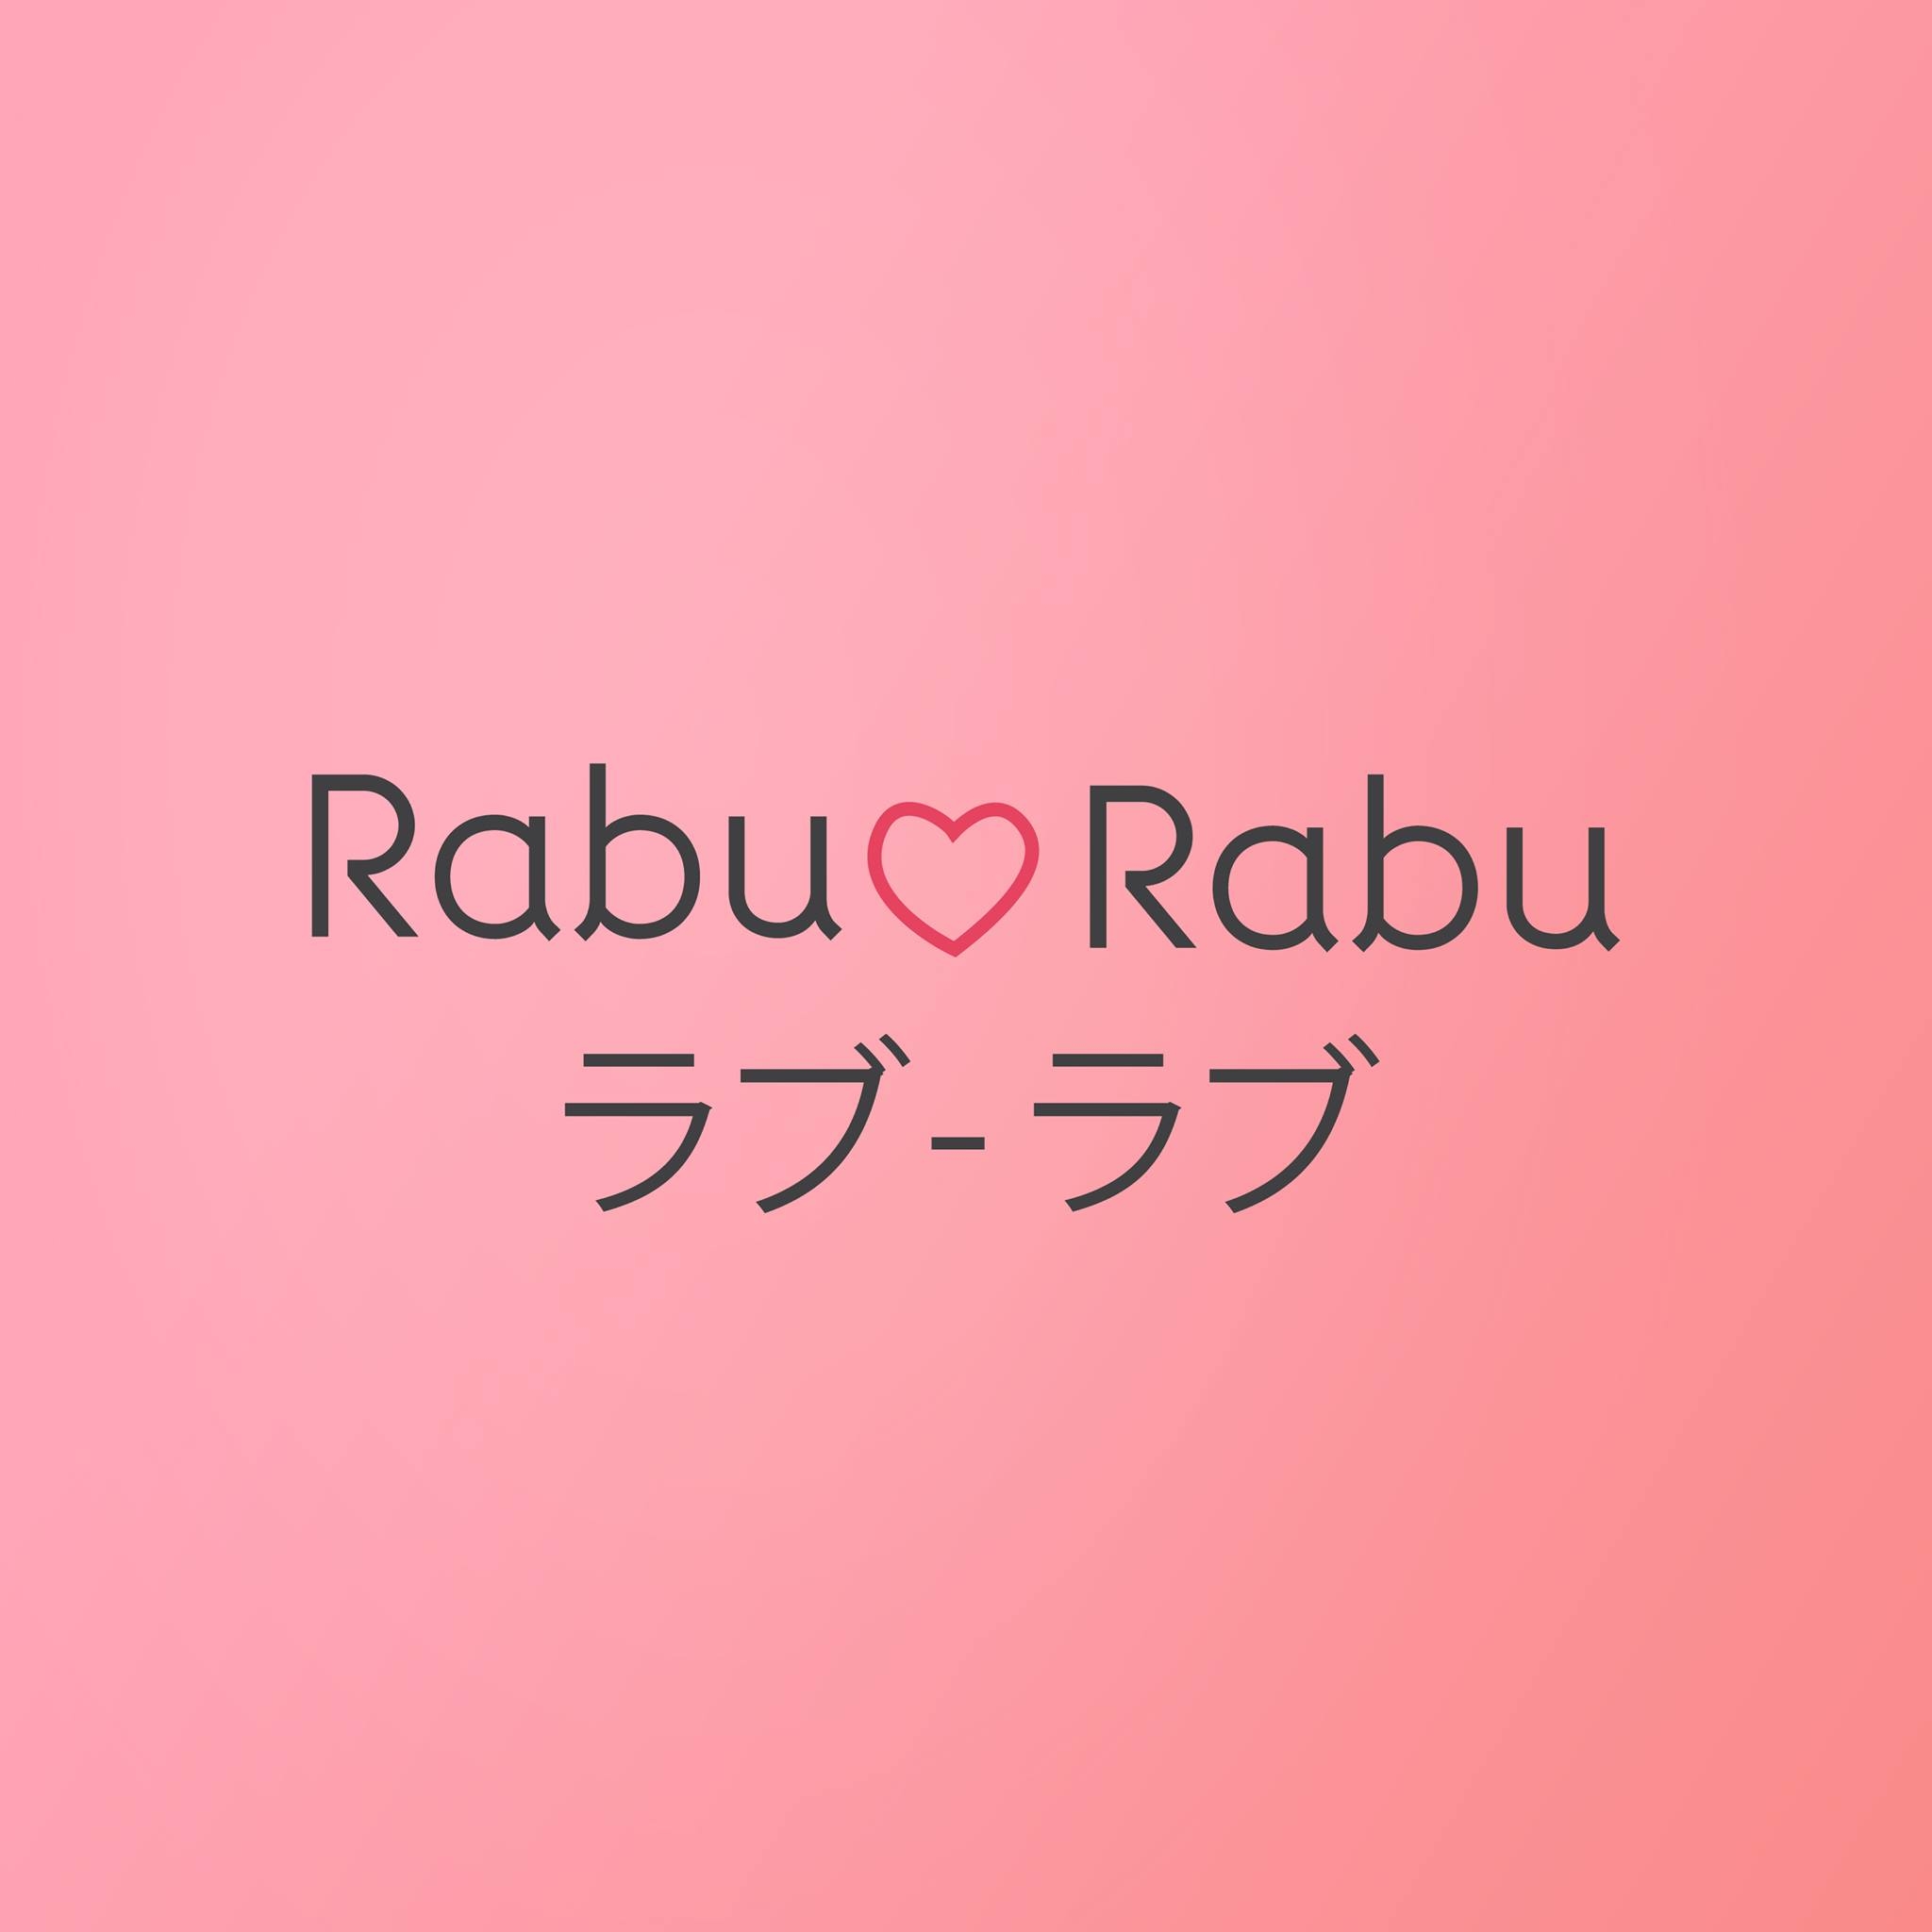 Rabu Rabu, Natural Look Cream Blush,Blush,บลัชออน,Rabu Rabu Natural Look Cream Blush,บลัช